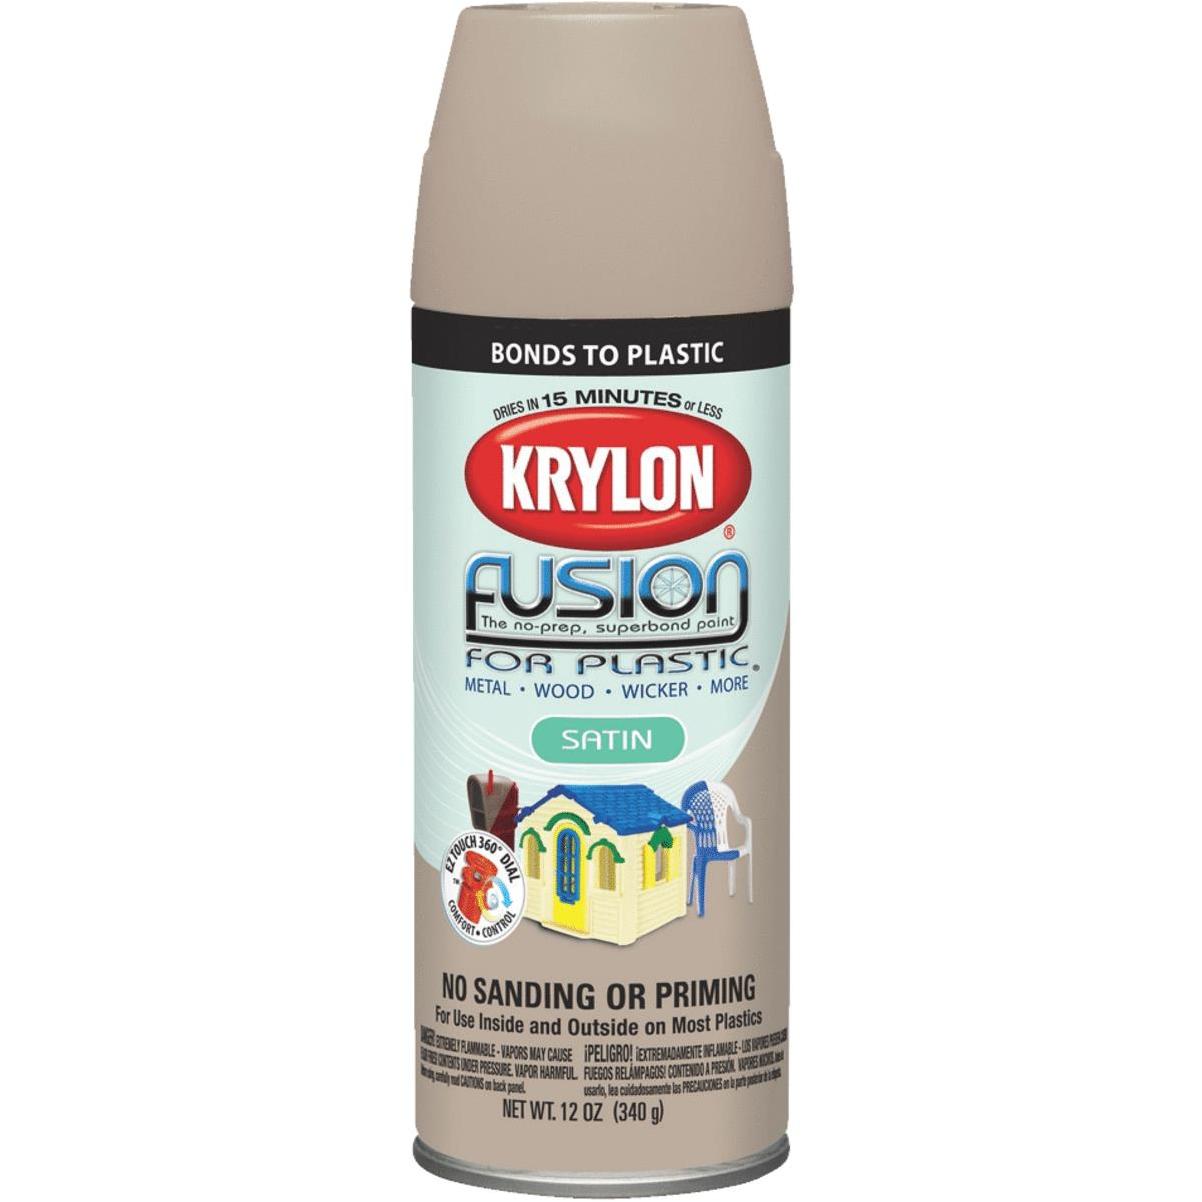 Krylon COLORmaxx Spray Paint + Primer, Gloss Ballet Slipper Nearly